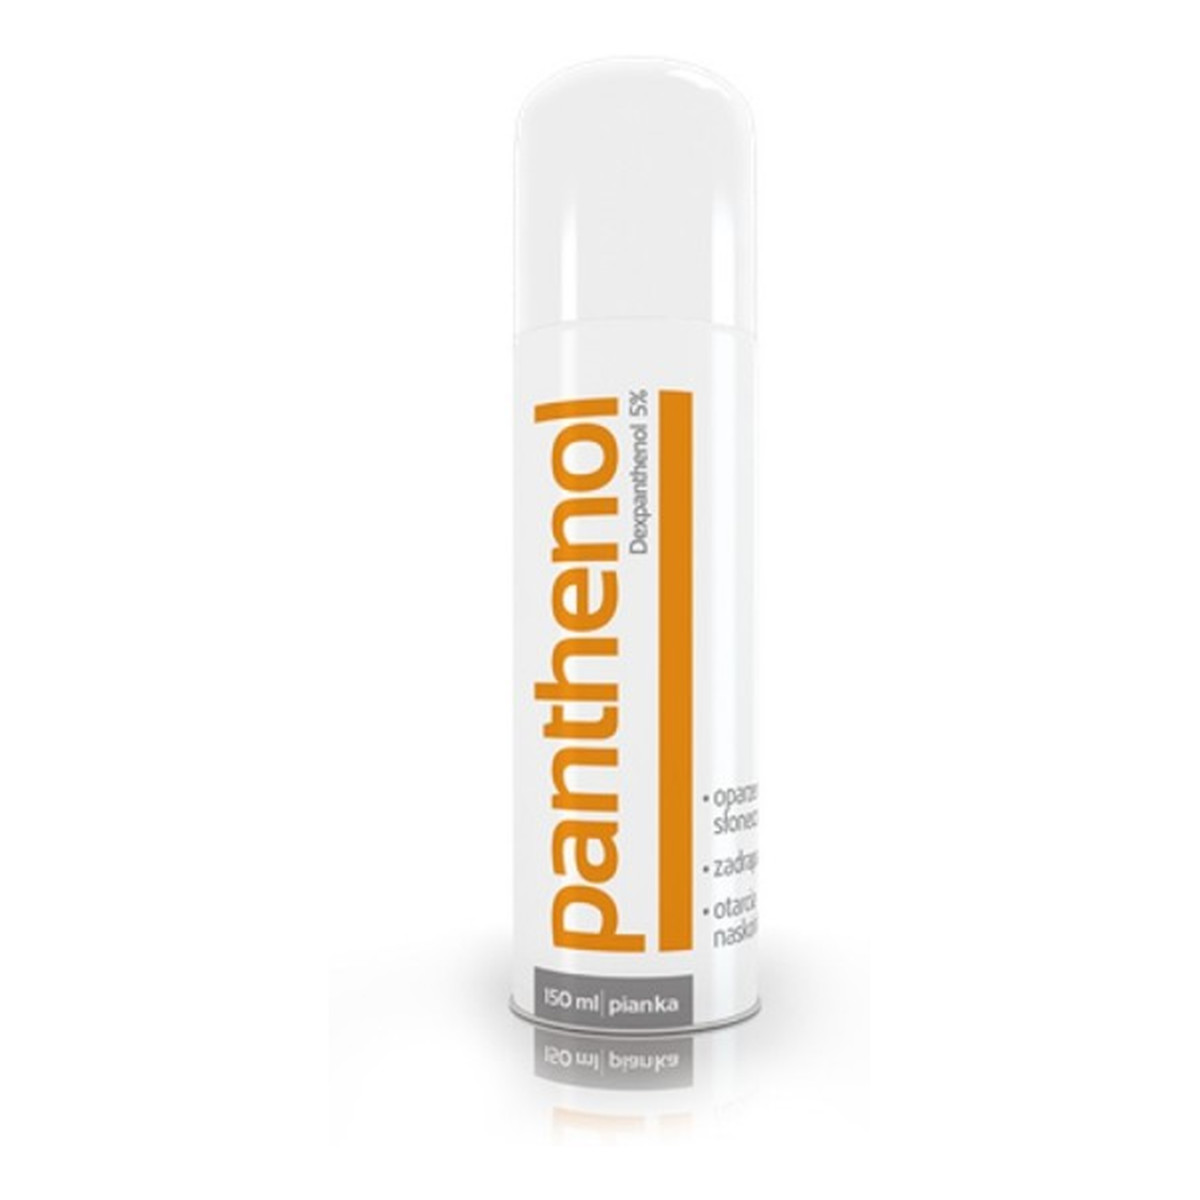 Aflofarm Panthenol Pianka 5 % 150ml